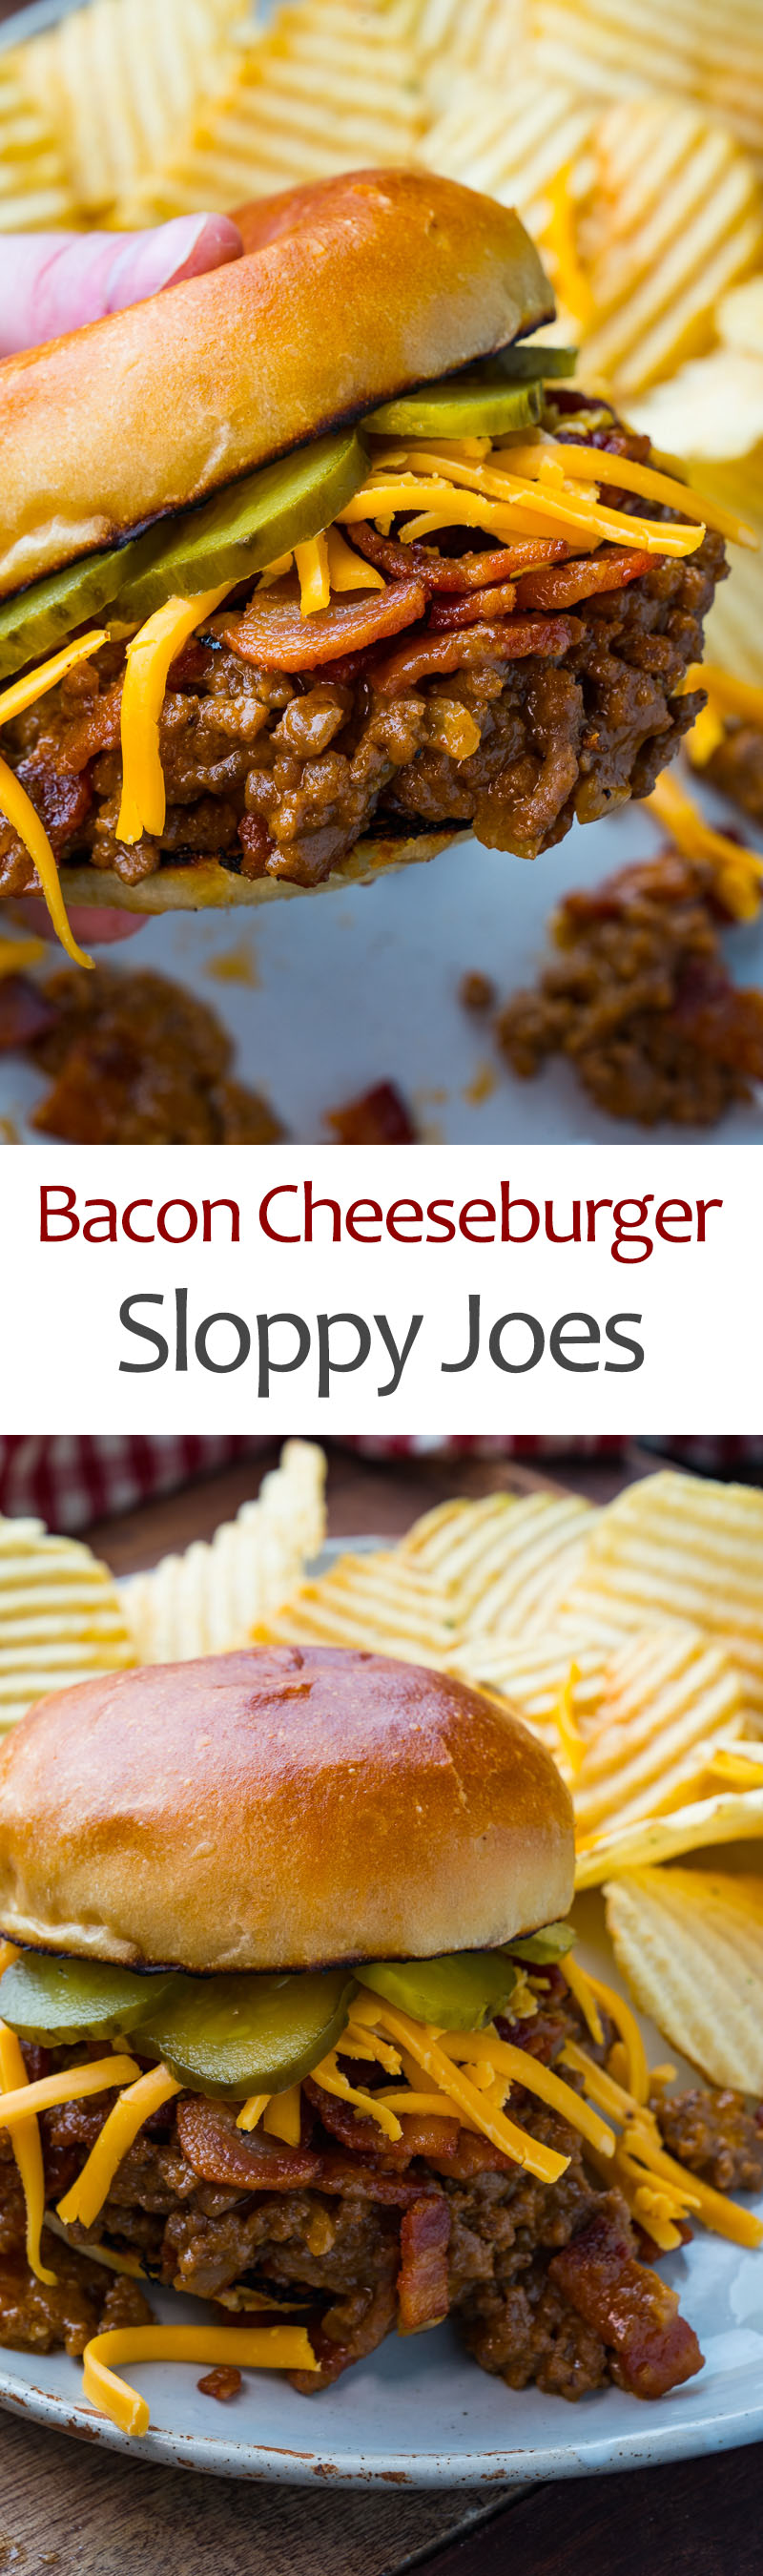 Bacon Cheeseburger Sloppy Joes